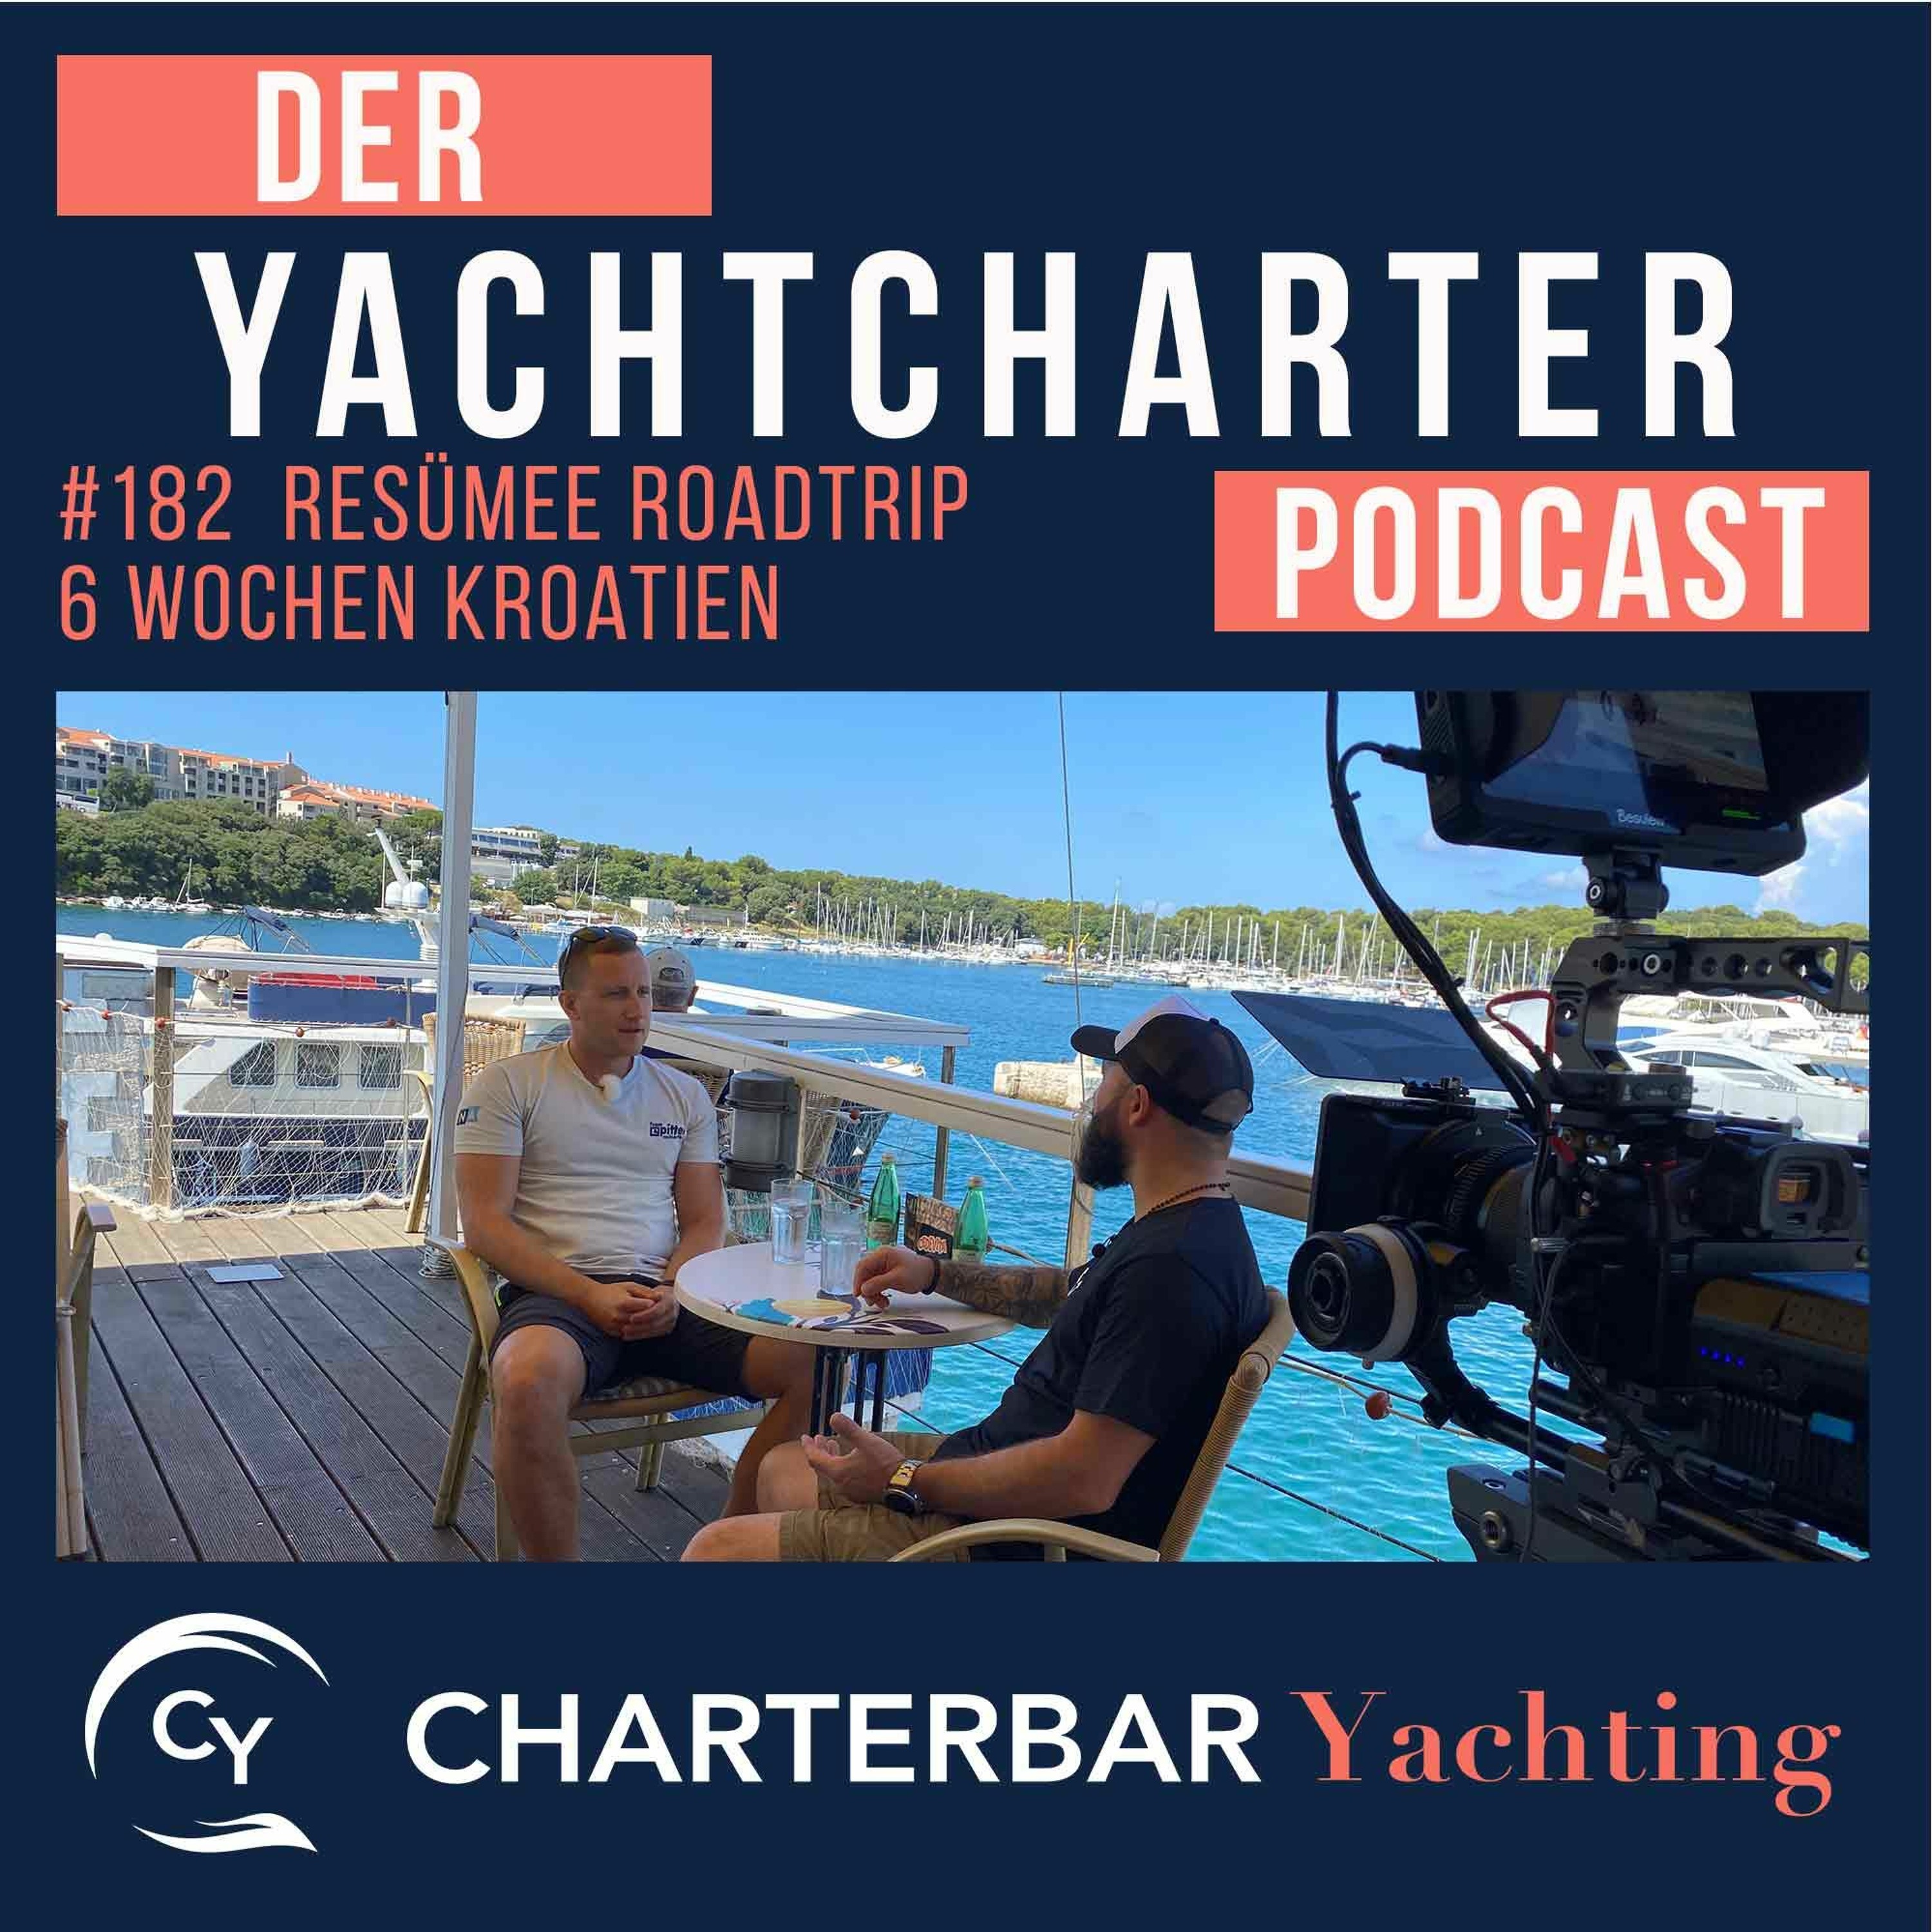 charterbar yachting jobs